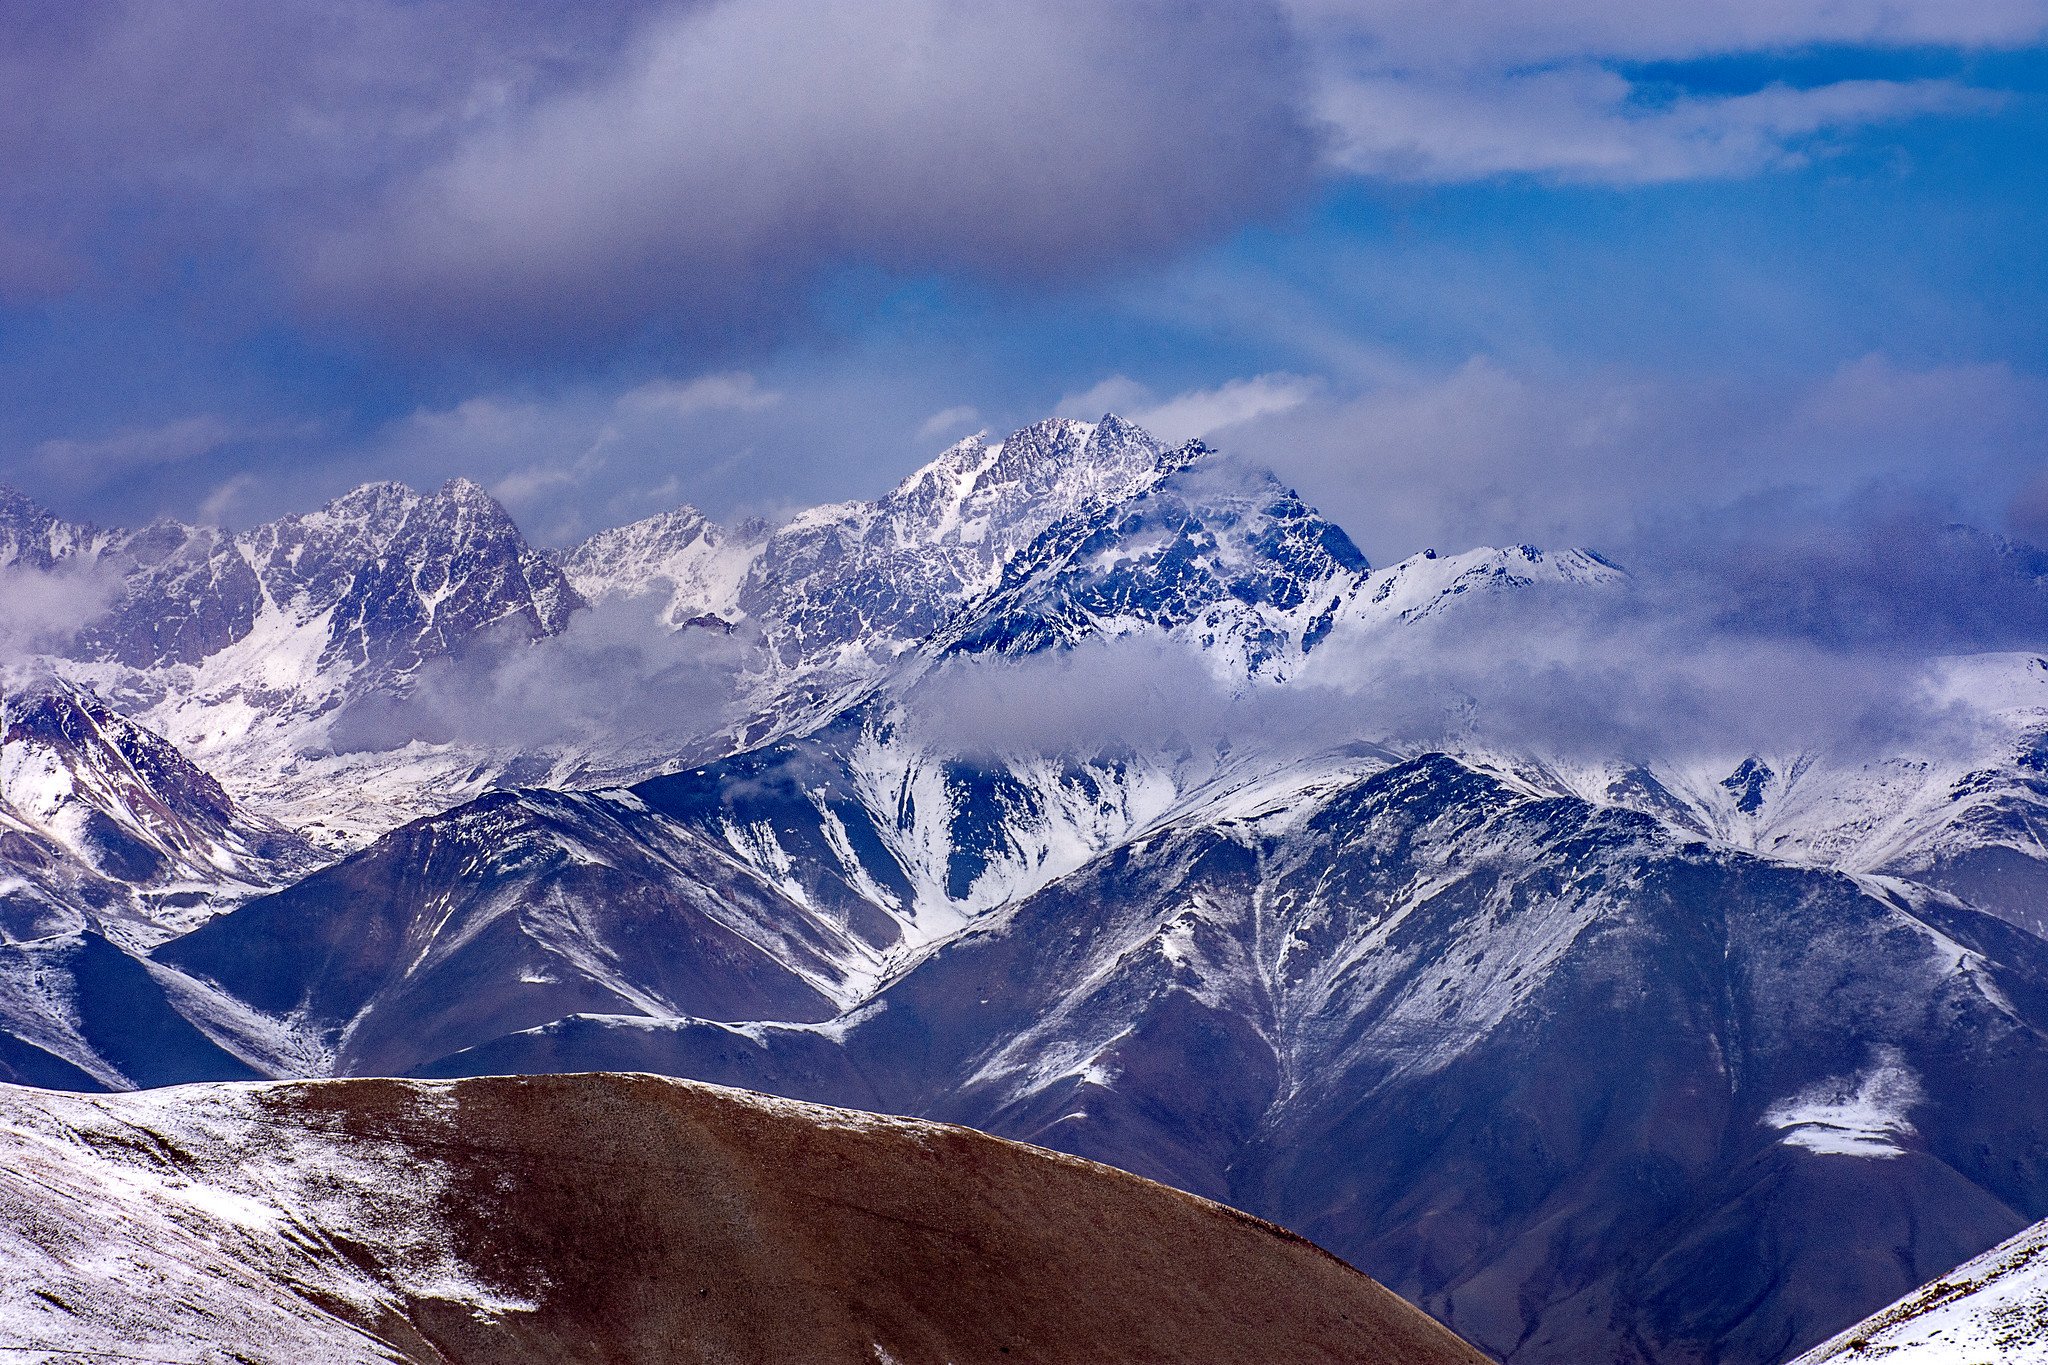 Kyrgyzstan. Travelling through the Tian Shan mountains near Kara-Keche Pass by Ian Kenn @iankennUK